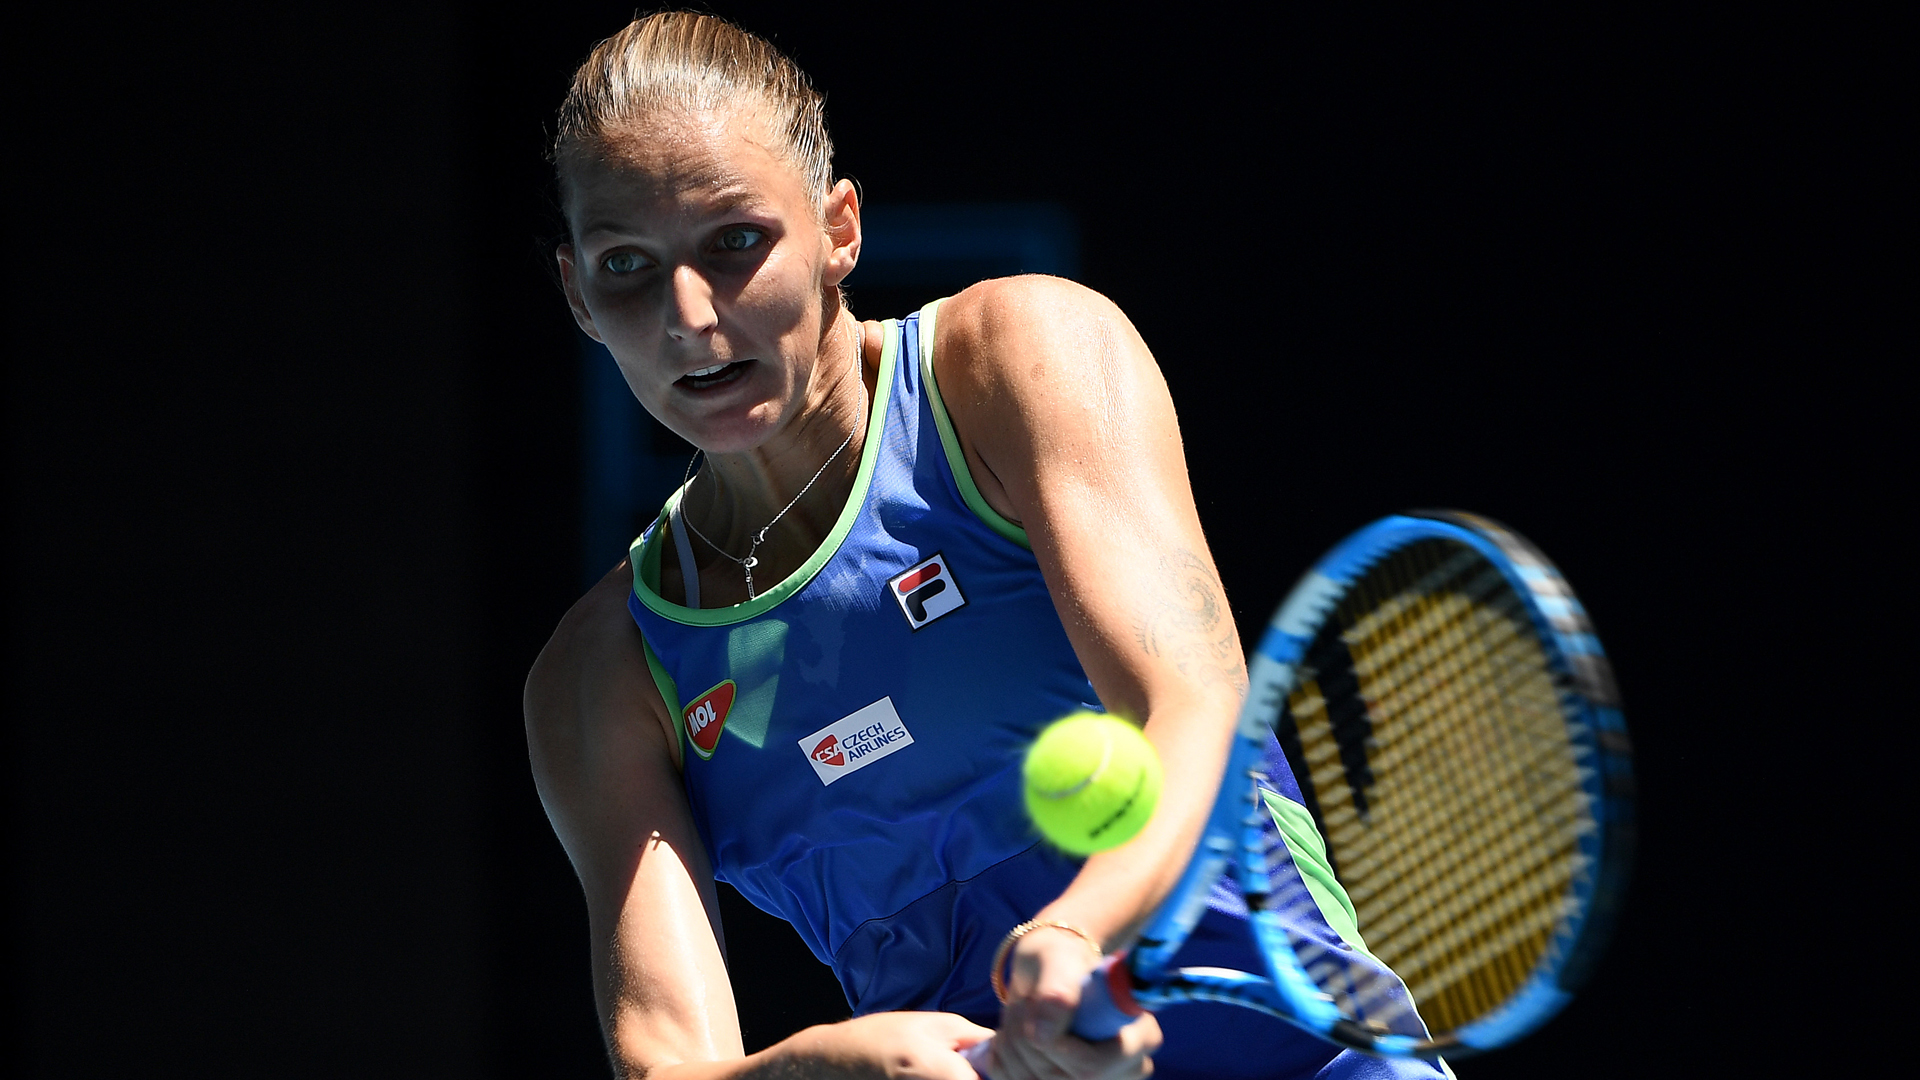 Saturday saw another Australian Open women's singles contender, Karolina Pliskova, fall in the third round.